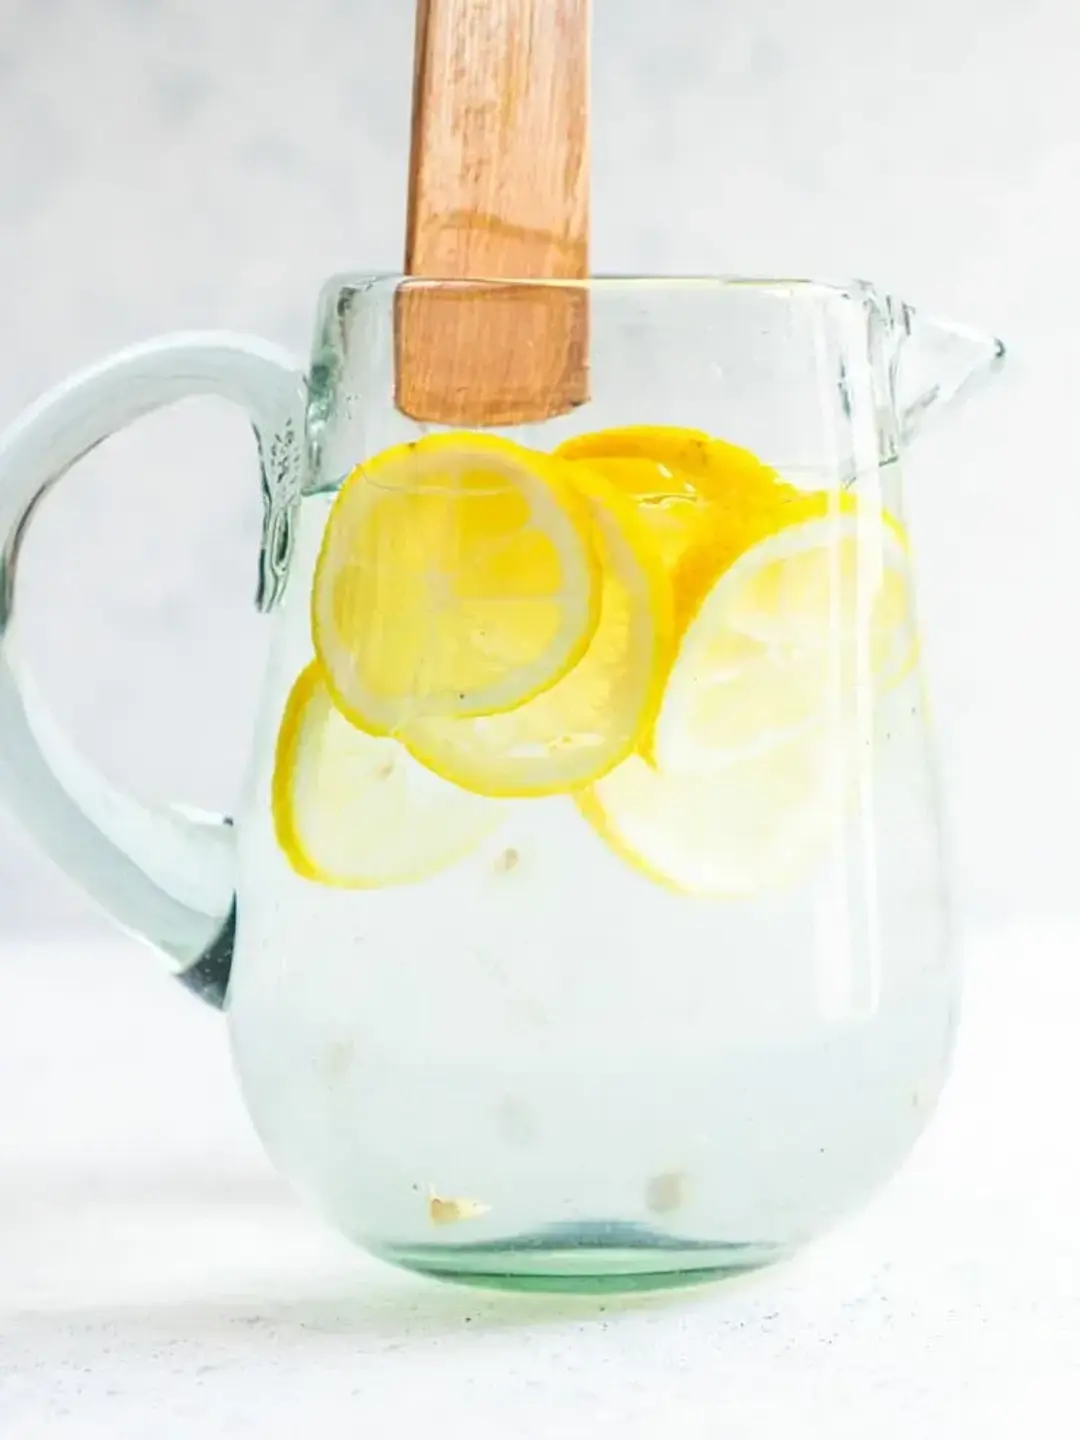 Water and Lemon Juice